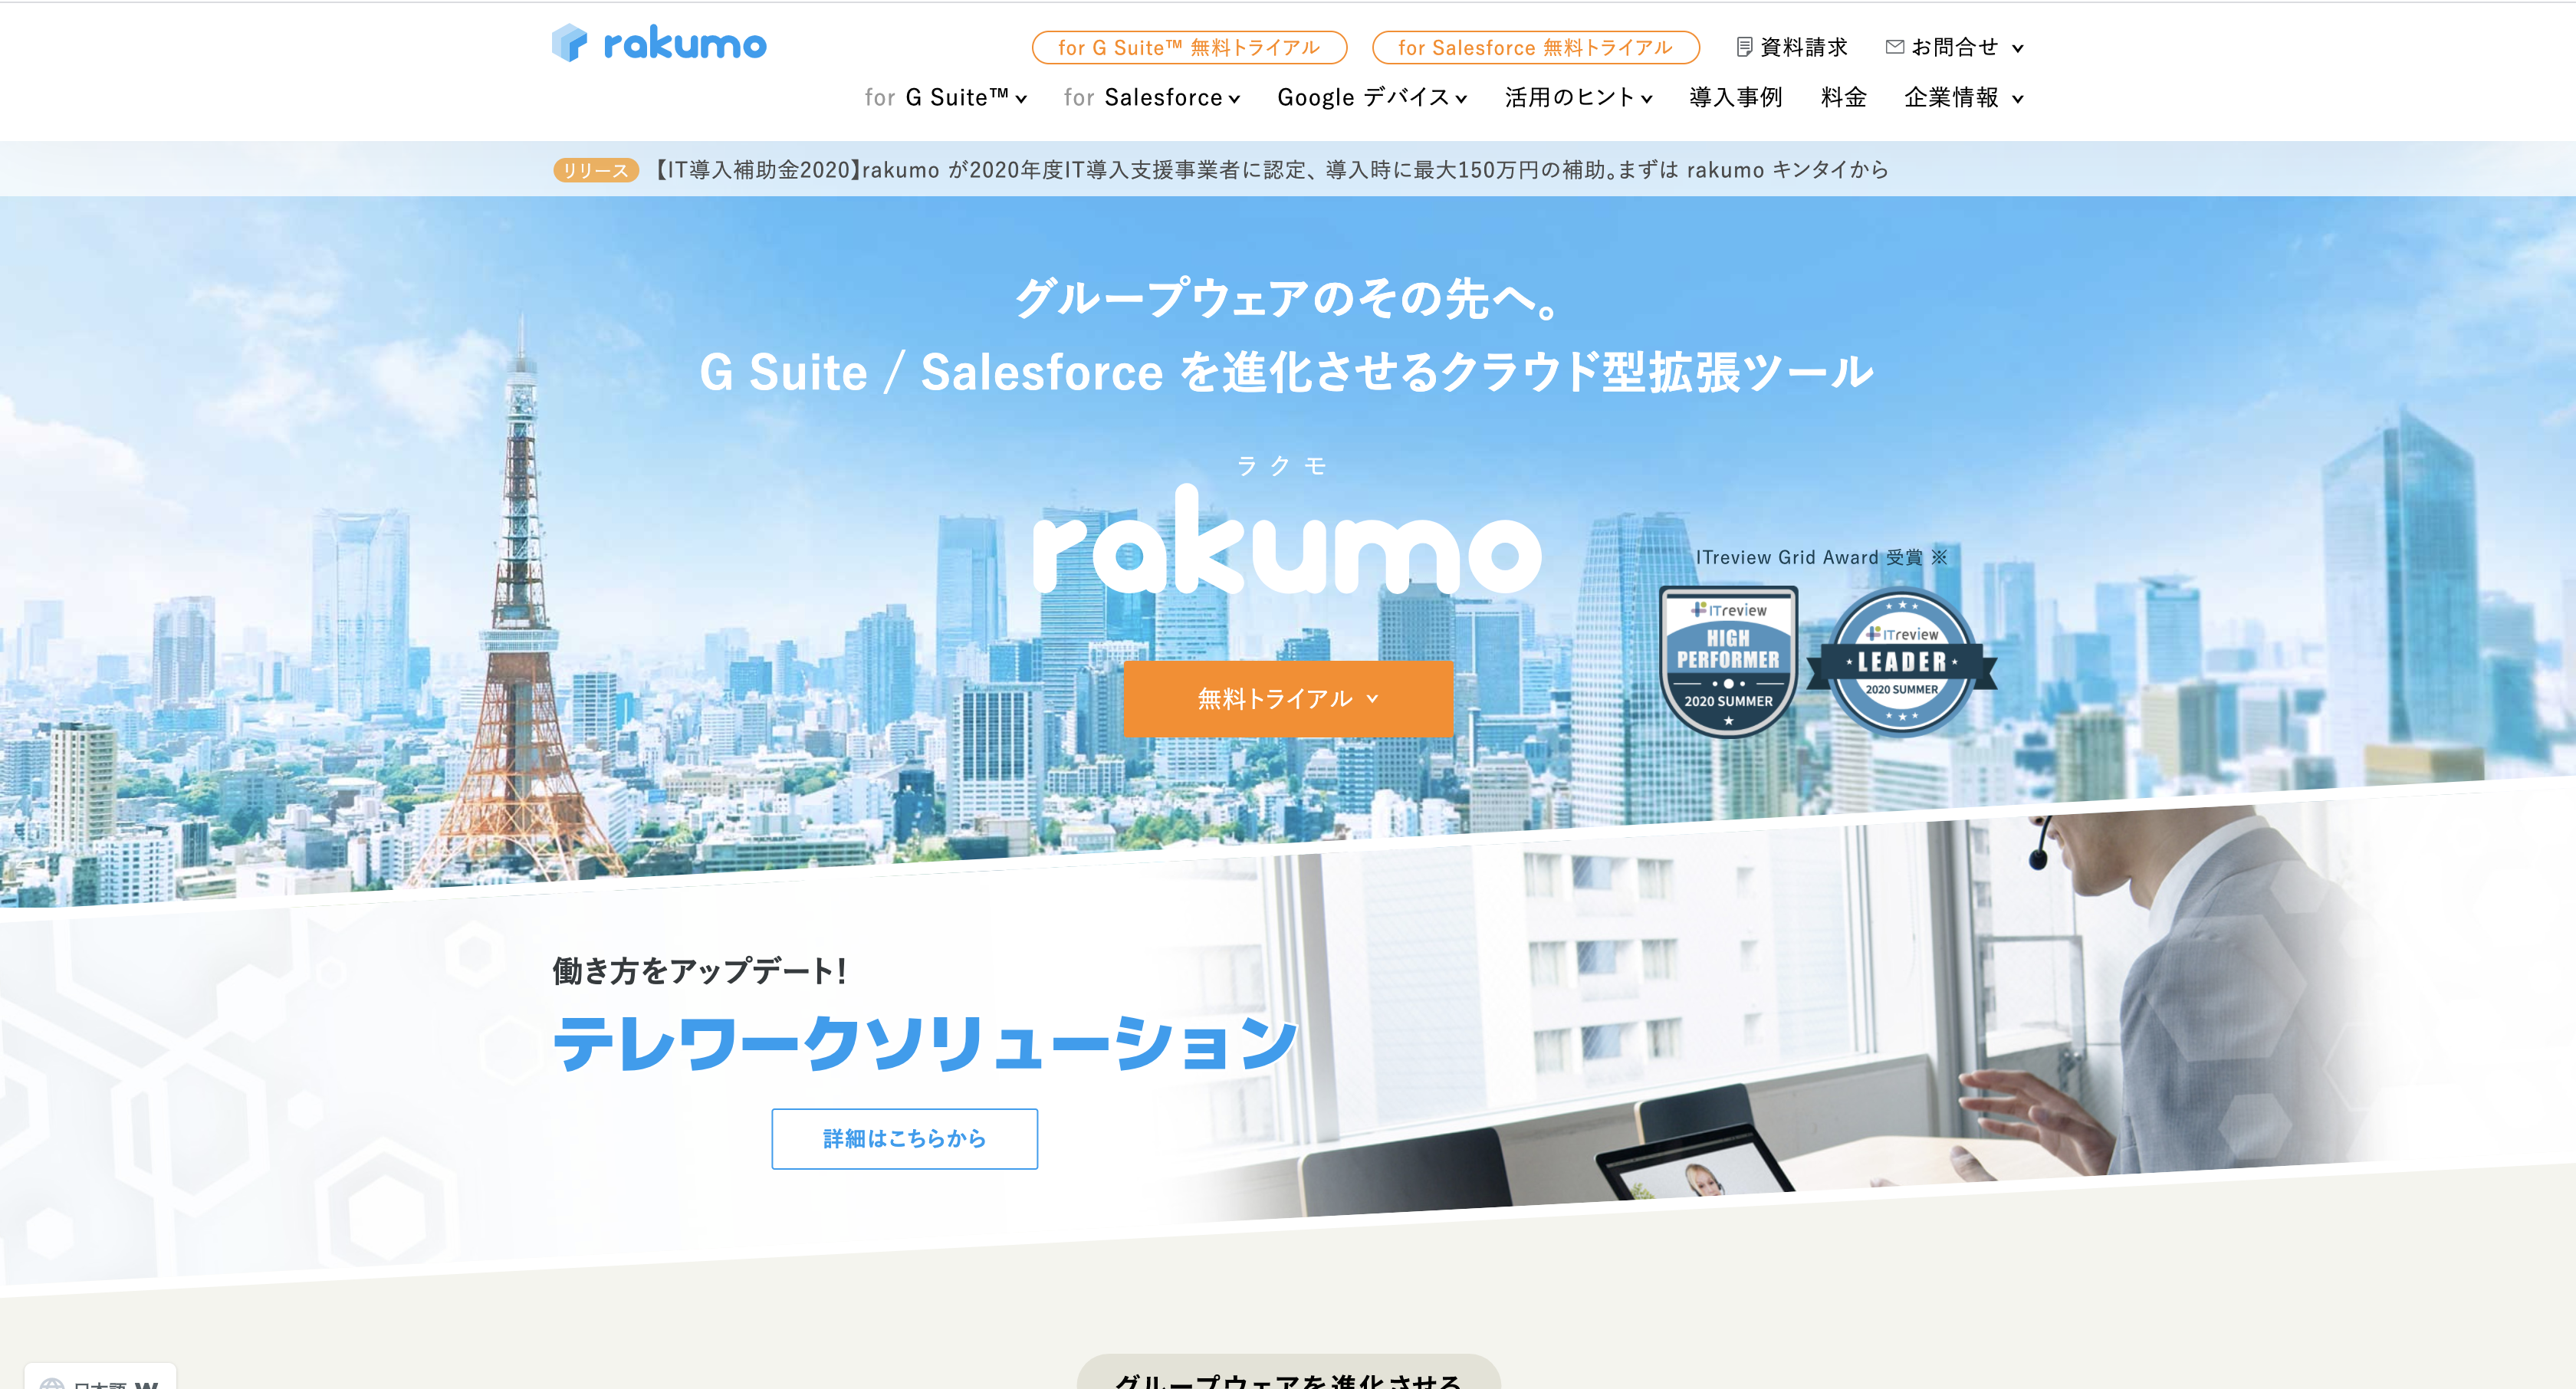 G Suiteと連動して勤怠管理や稟議・経費精算などを利用できるサービス【rakumo】